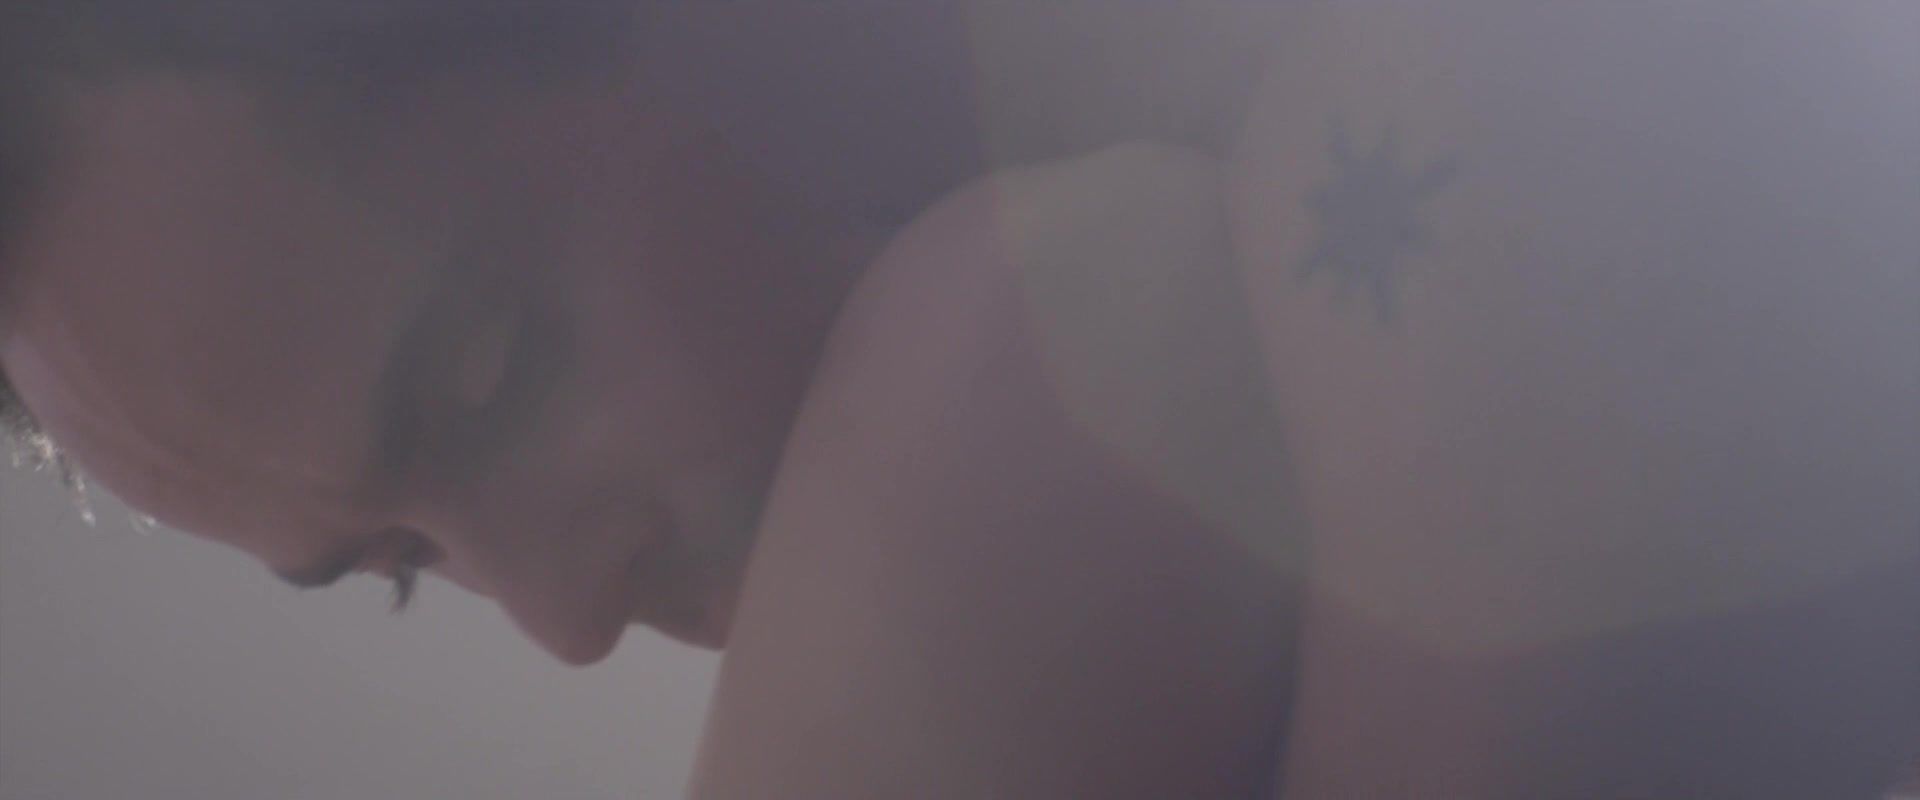 FapSet Constance Brenneman nude - Night Eyes (2014) Spreading